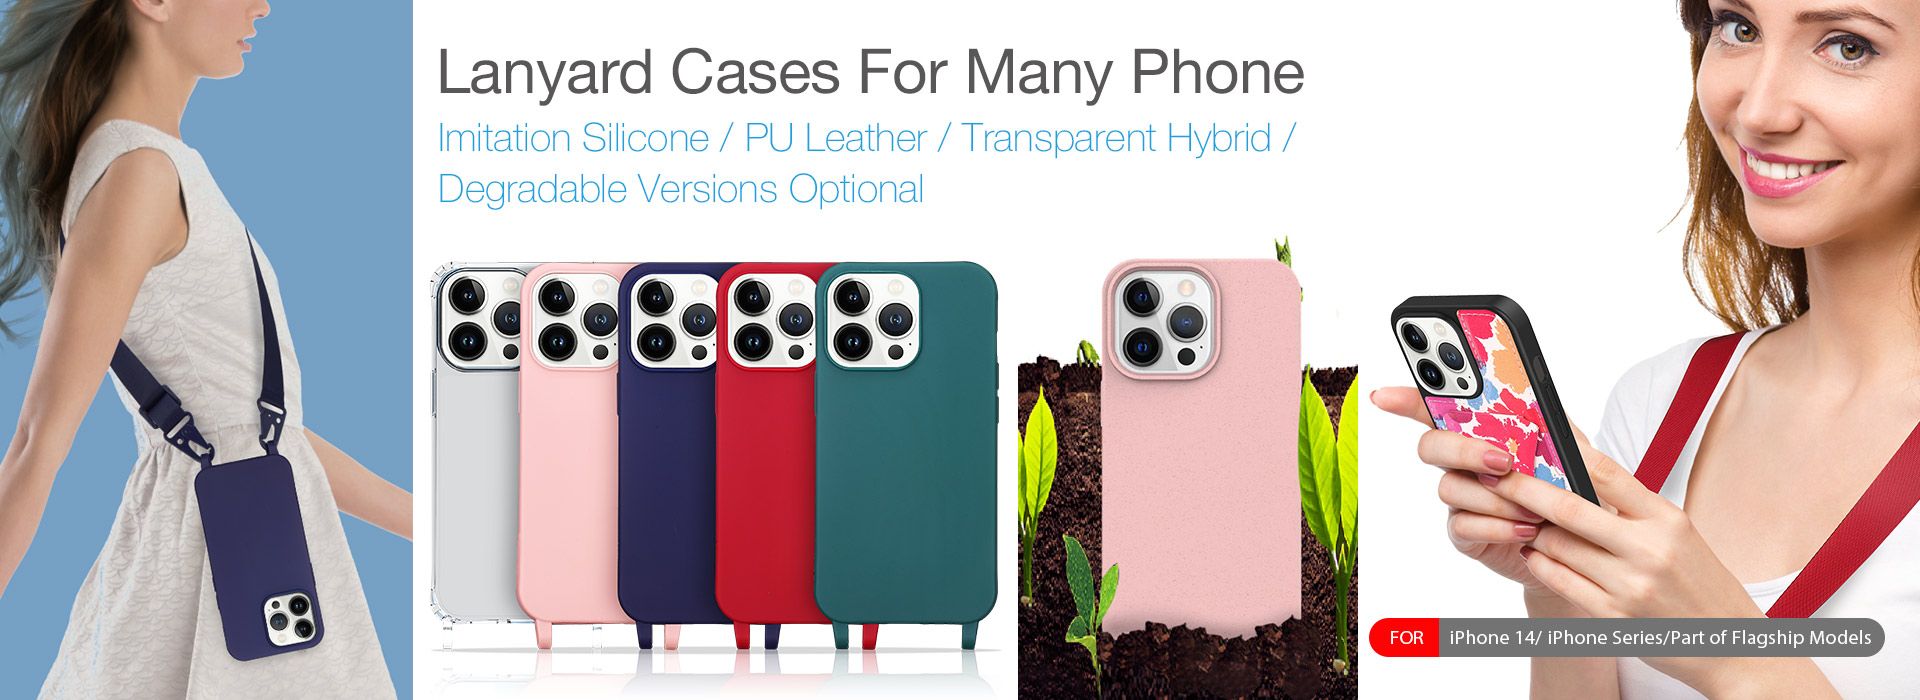 Lanyard Case--Degradable version(Green)